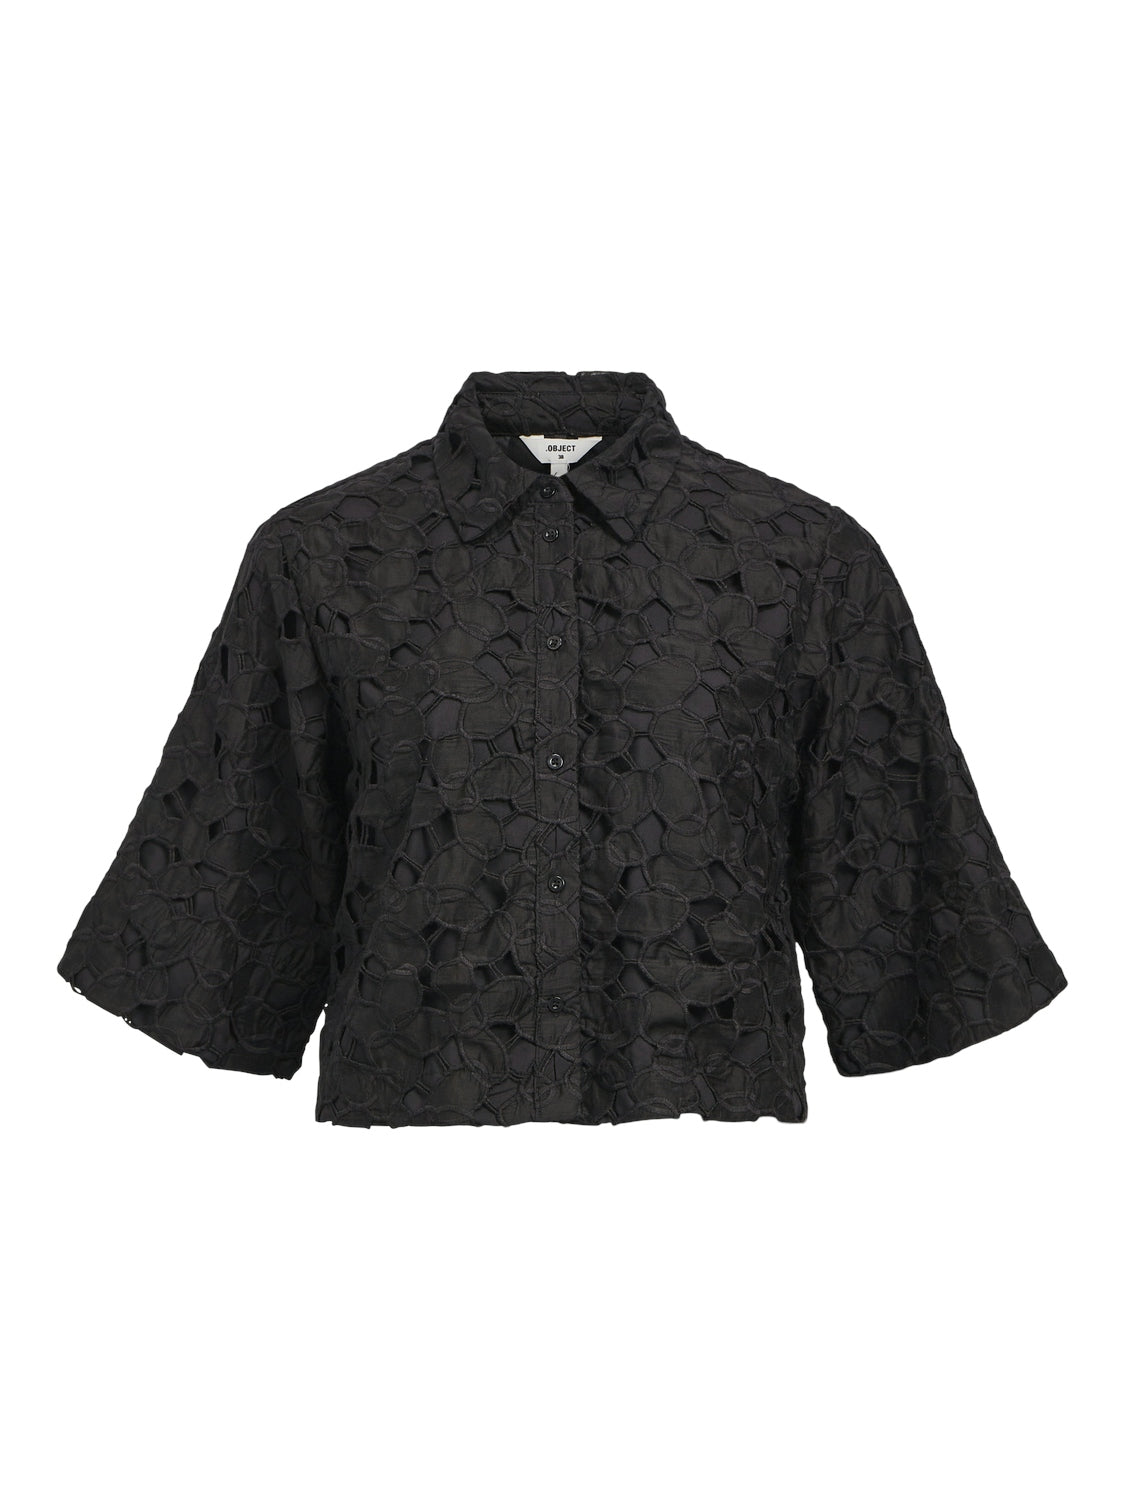 Object Divii shirt, black